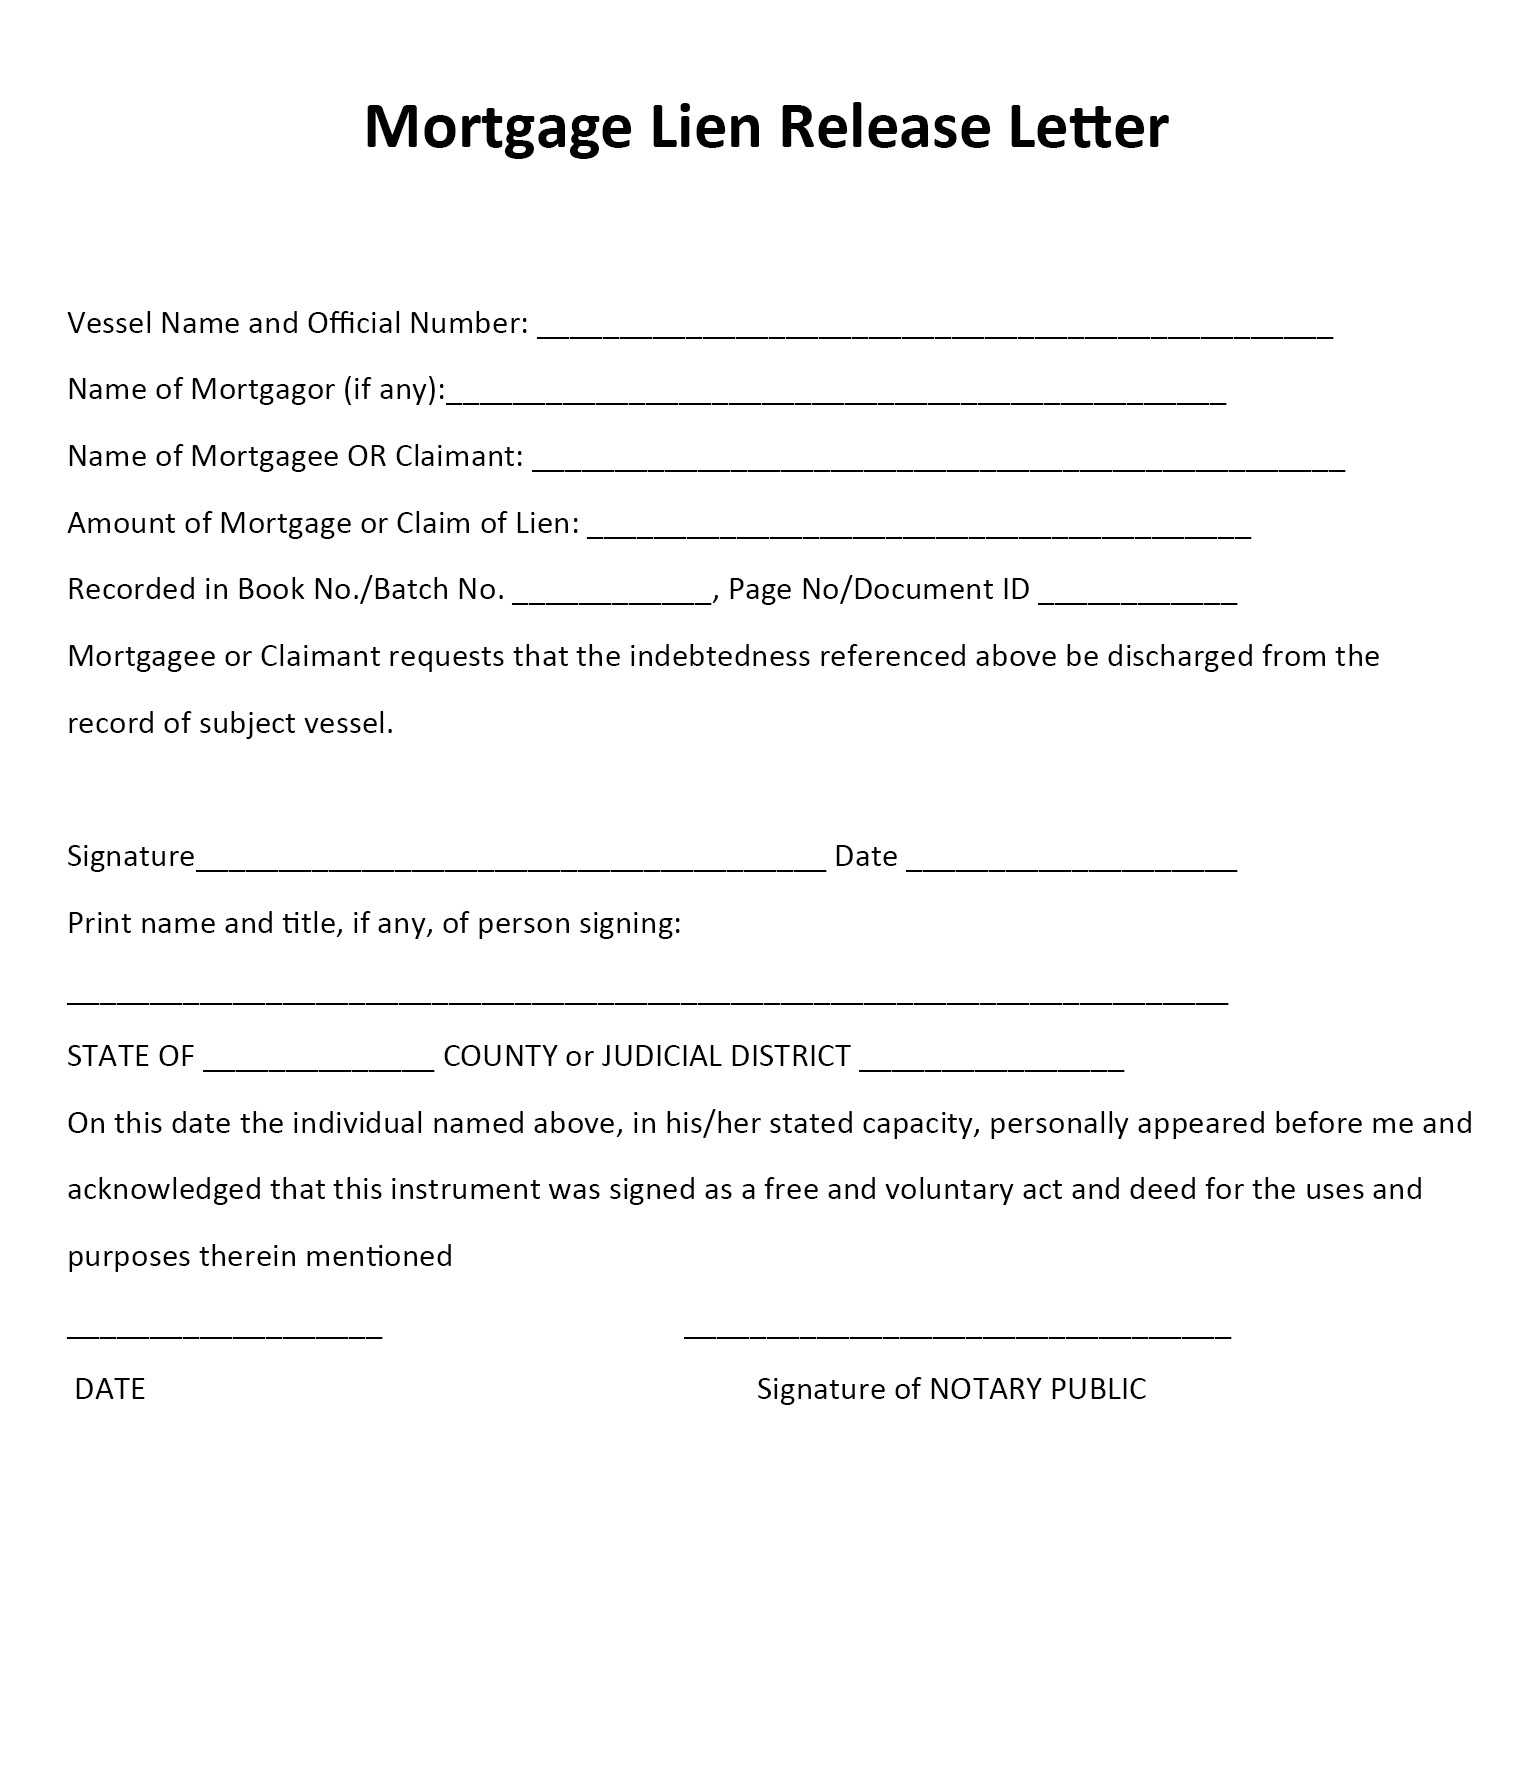 mortgage Lien Release Letter